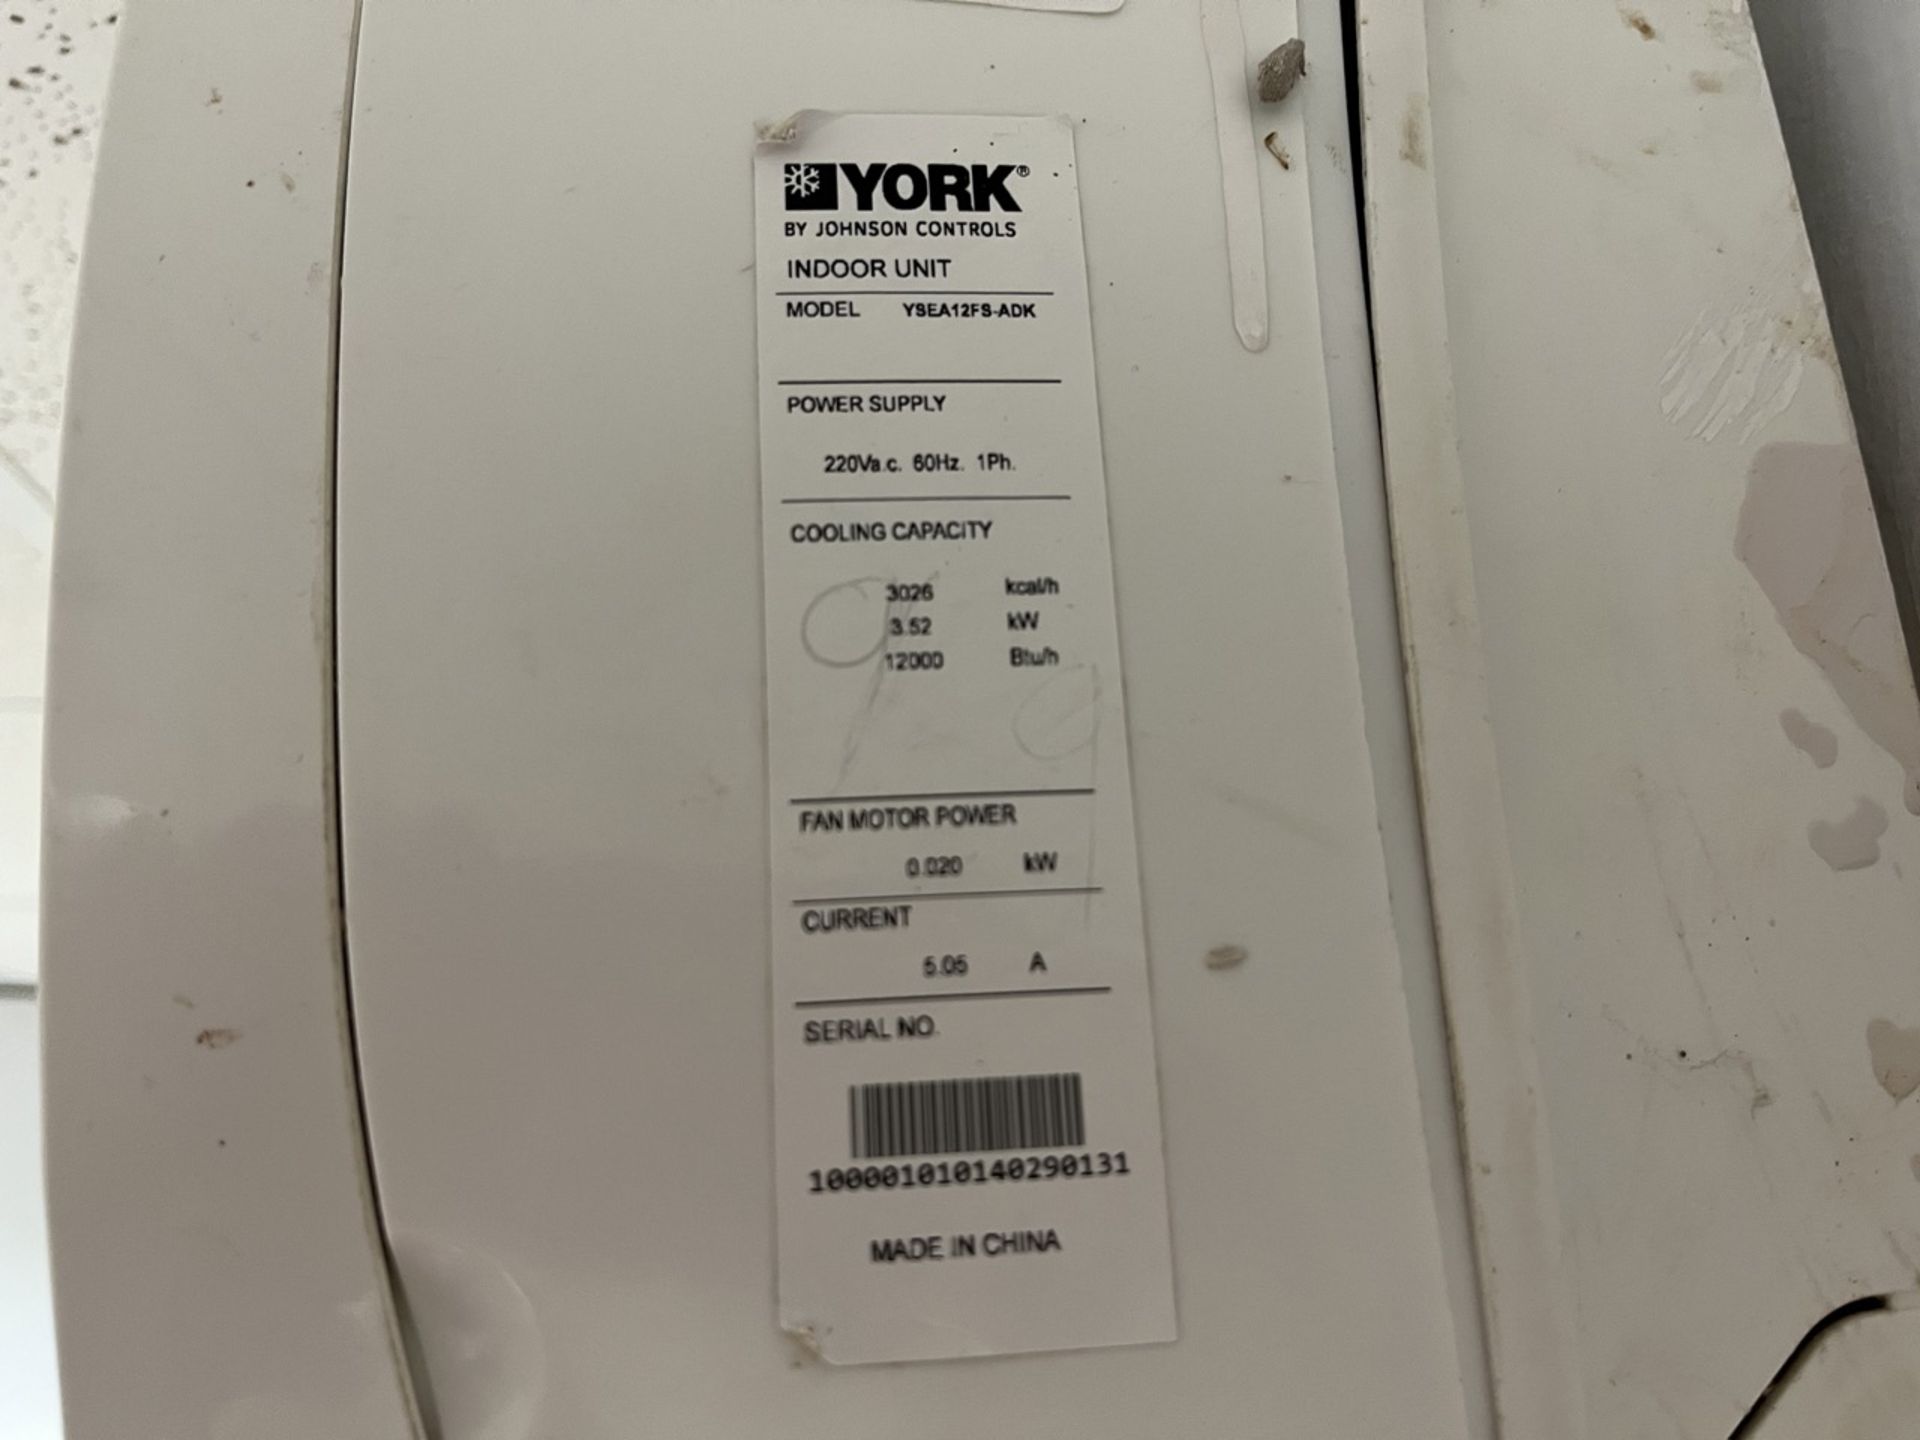 York minisplit air conditioner with control, Model YSEA12FS-ADK, Series 100001010140290131, 220 Vol - Image 9 of 14